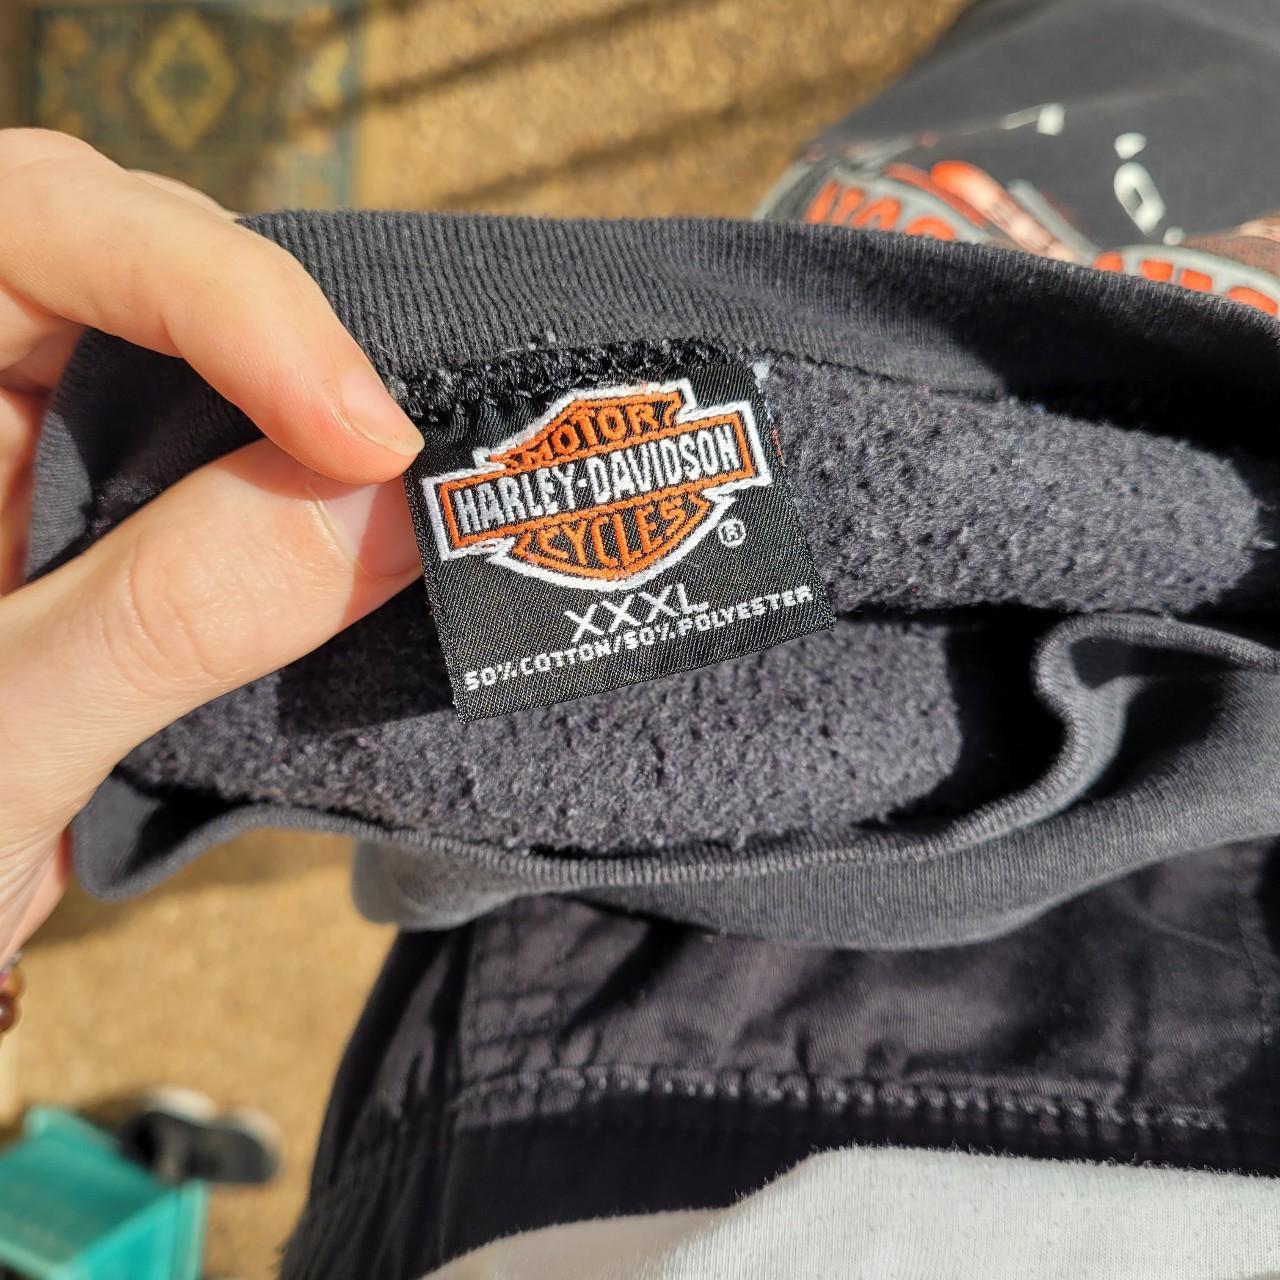 Harley Davidson Men's Black and Orange Sweatshirt (5)